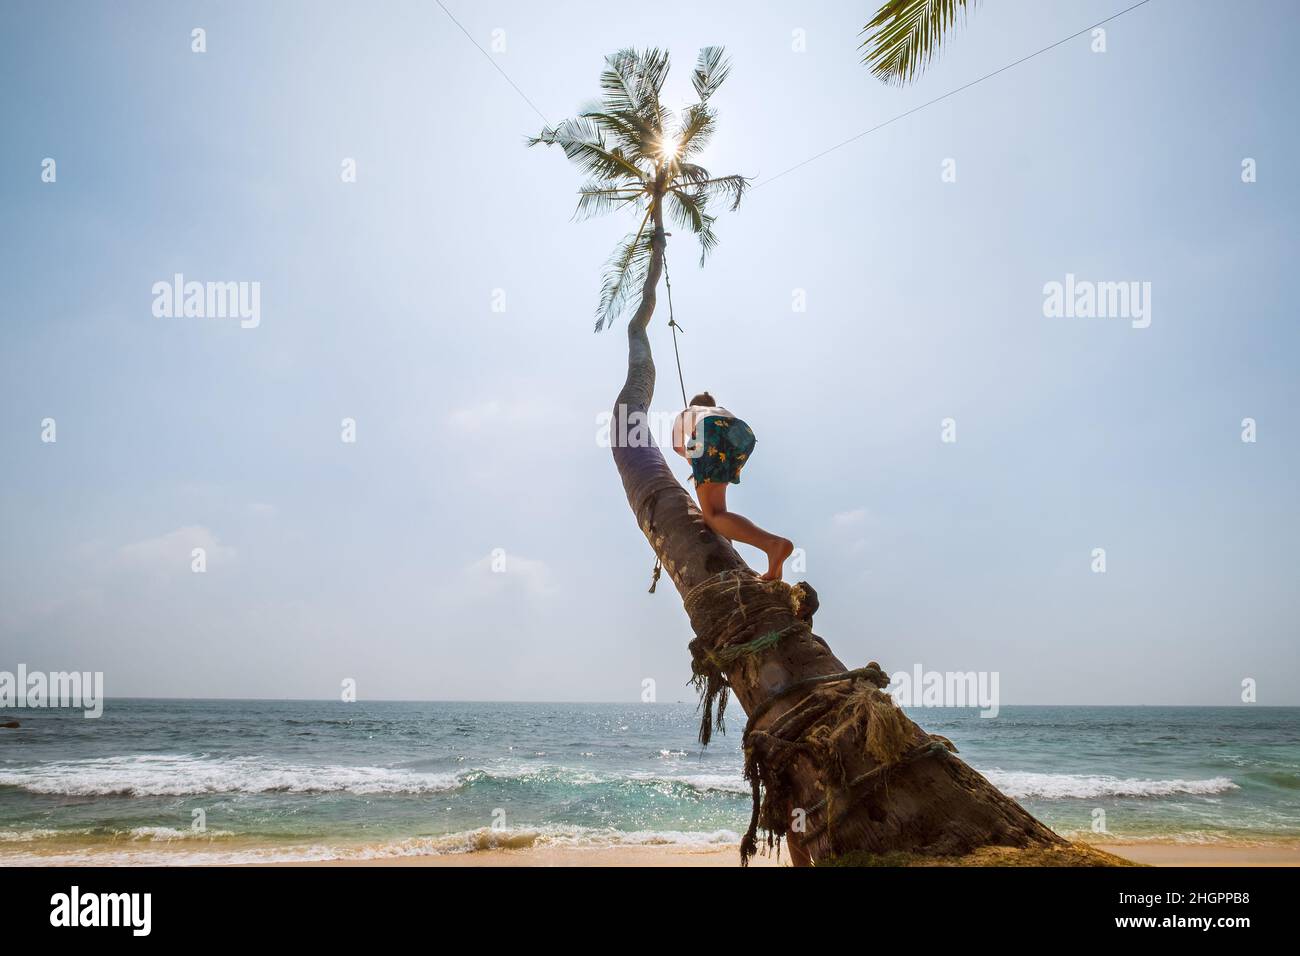 Teenager boy climbing a palm tree for swinging on the beach swing. Sri Lanka island exotic vacation concept image. Stock Photo